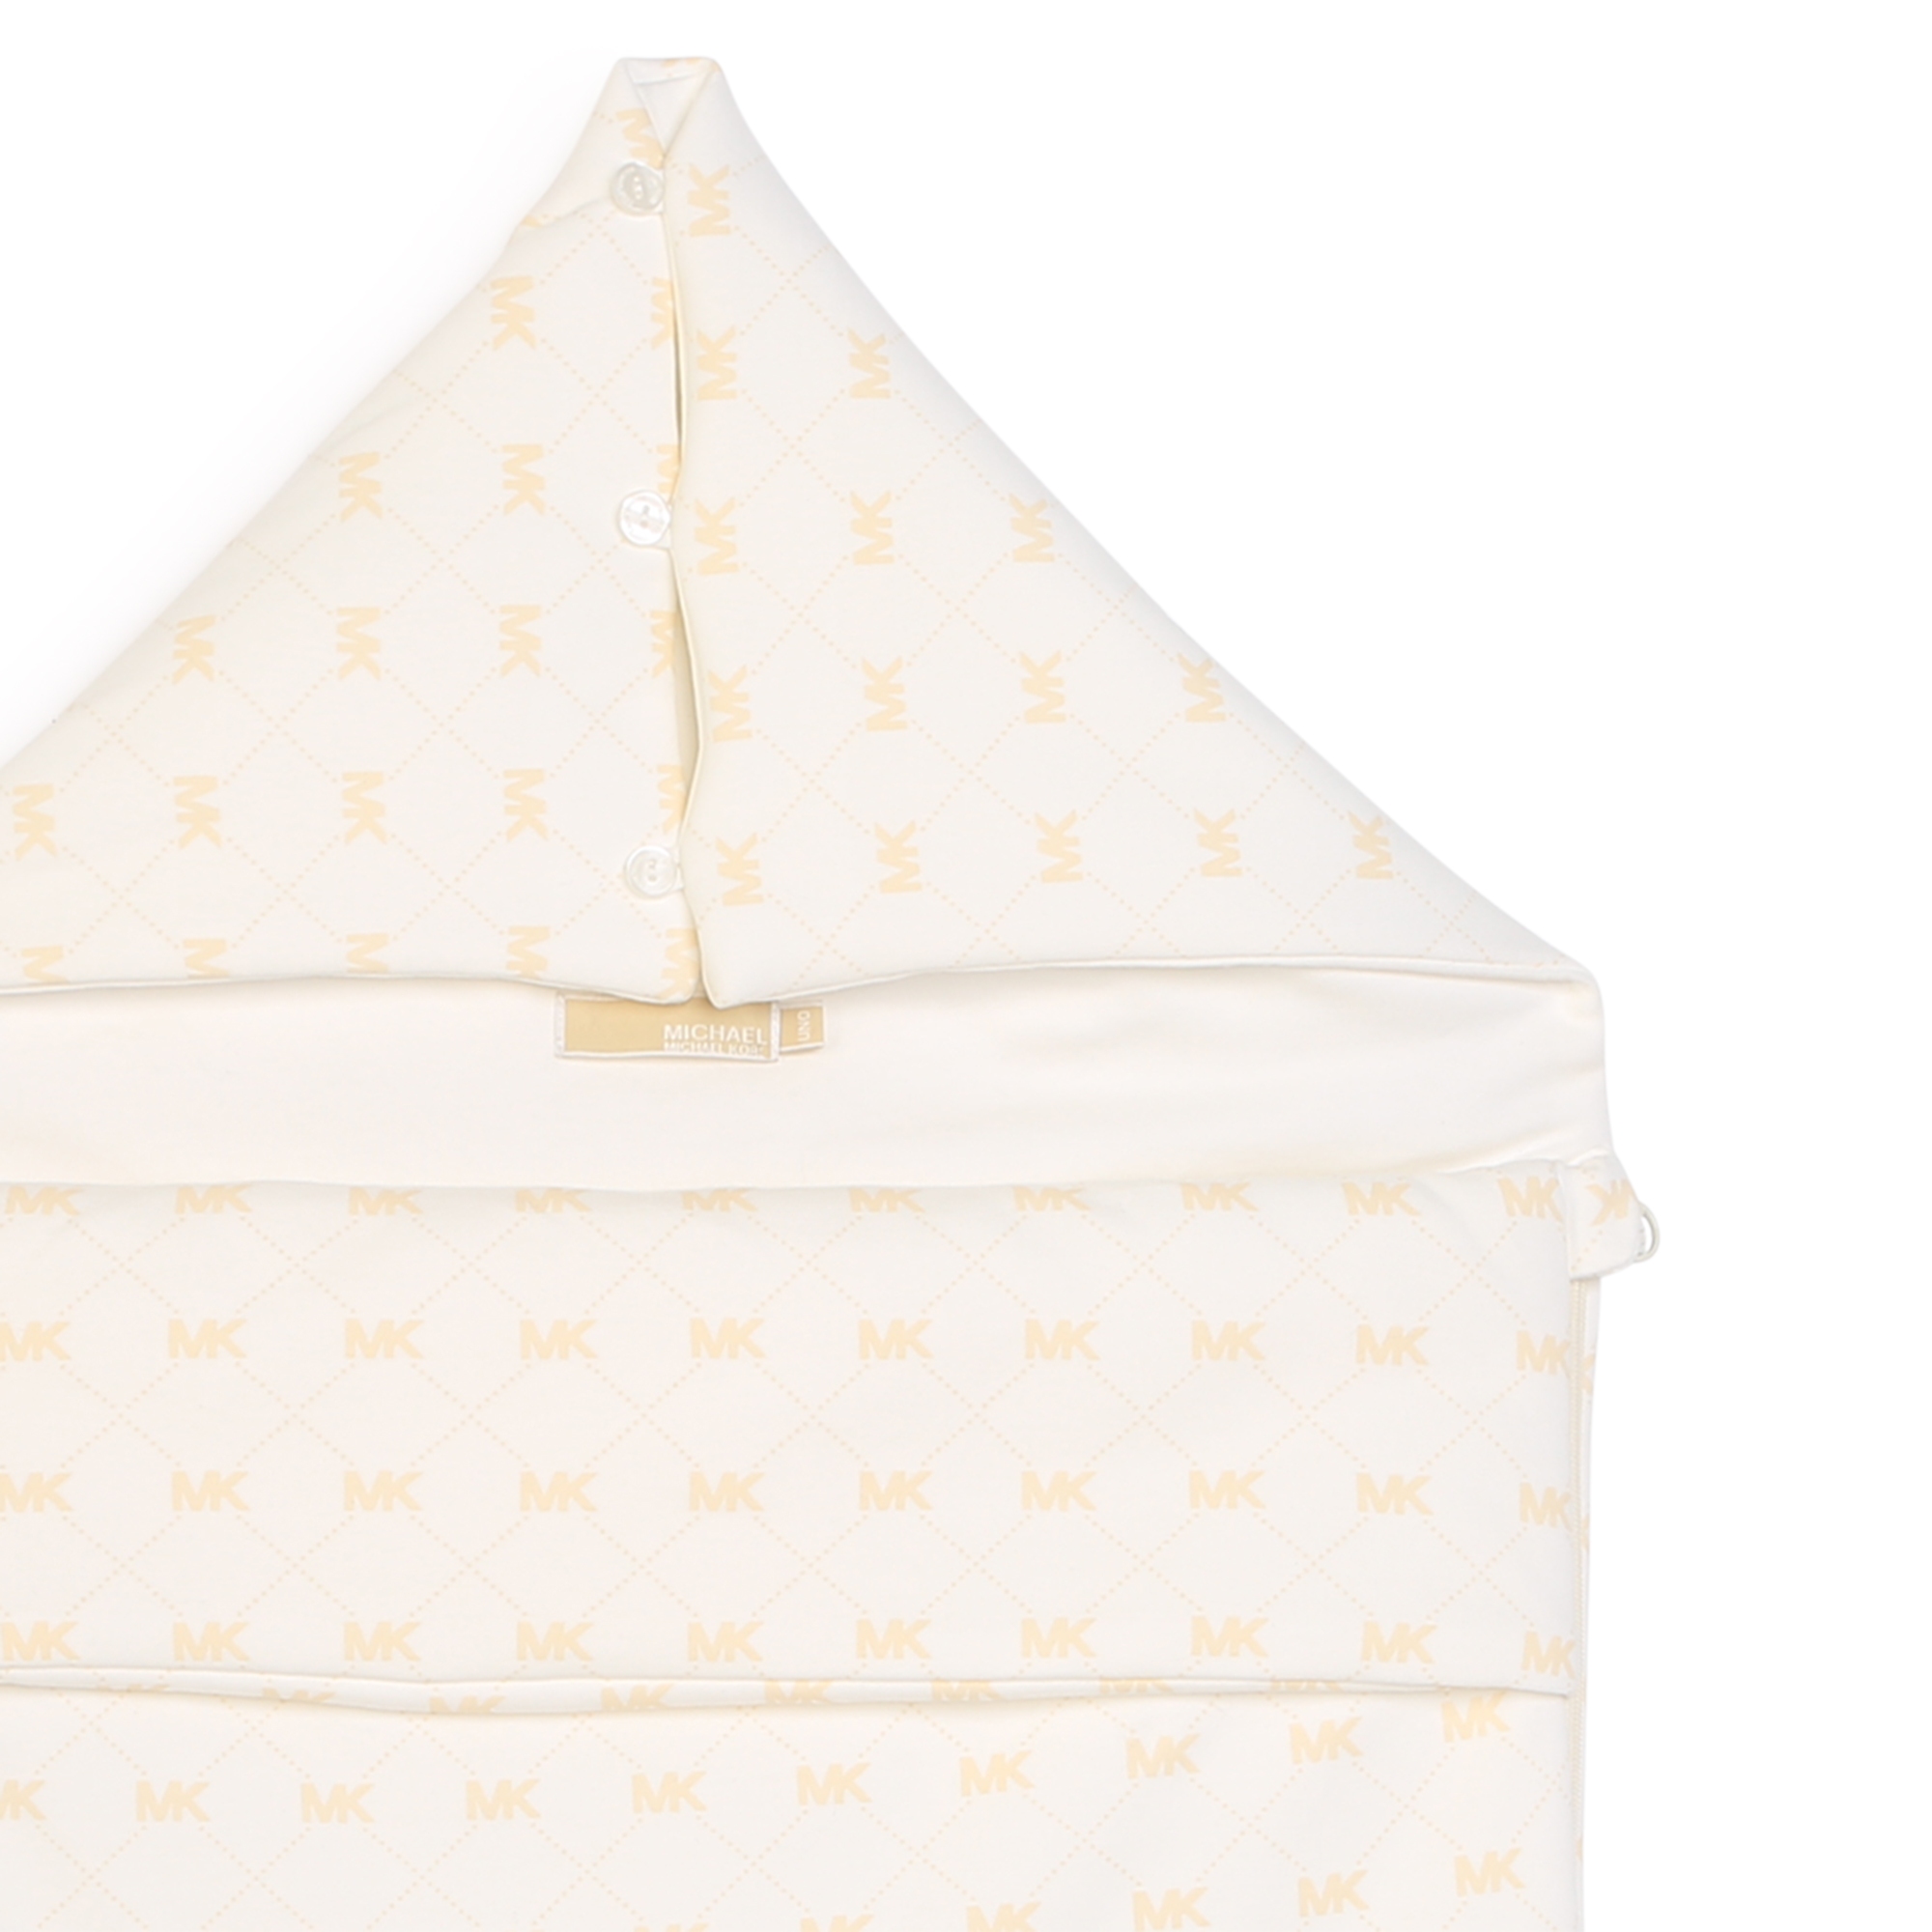 Baby sleeping bag in cotton MICHAEL KORS for UNISEX